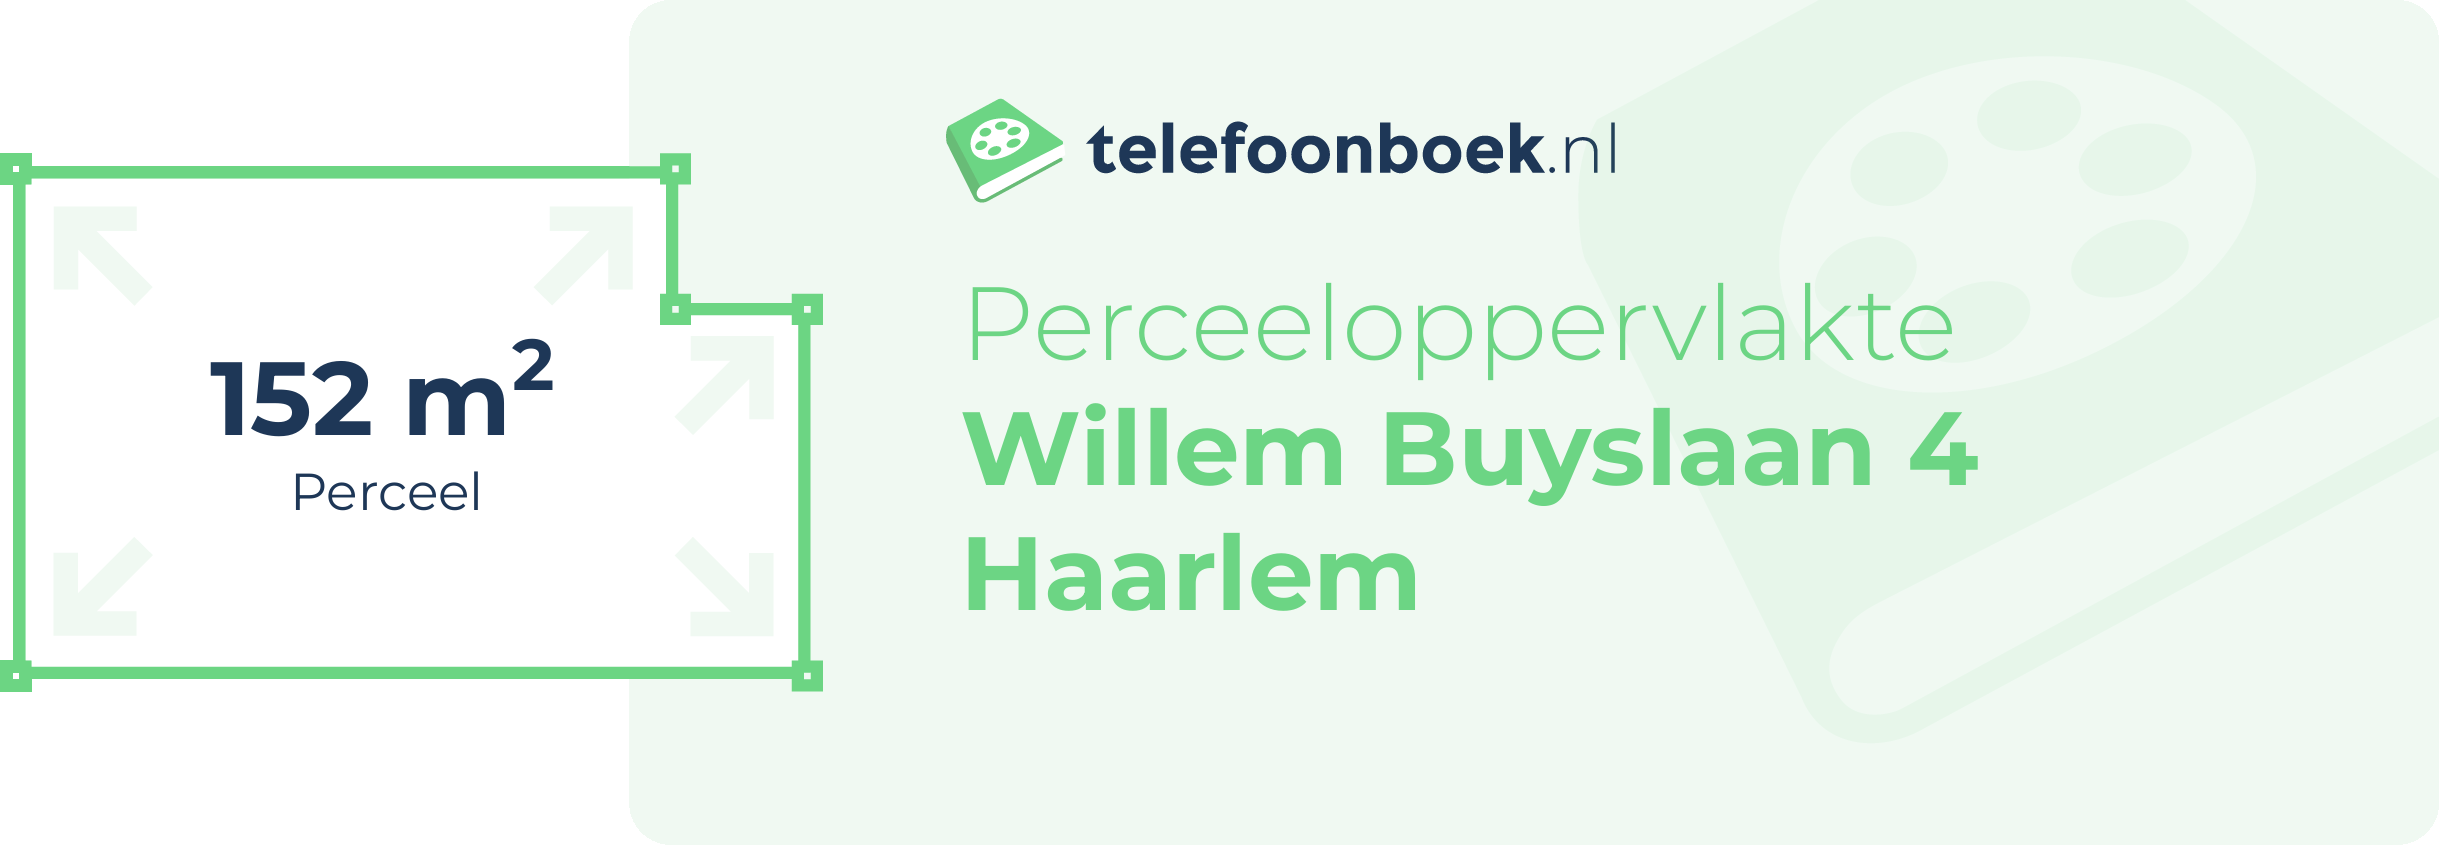 Perceeloppervlakte Willem Buyslaan 4 Haarlem